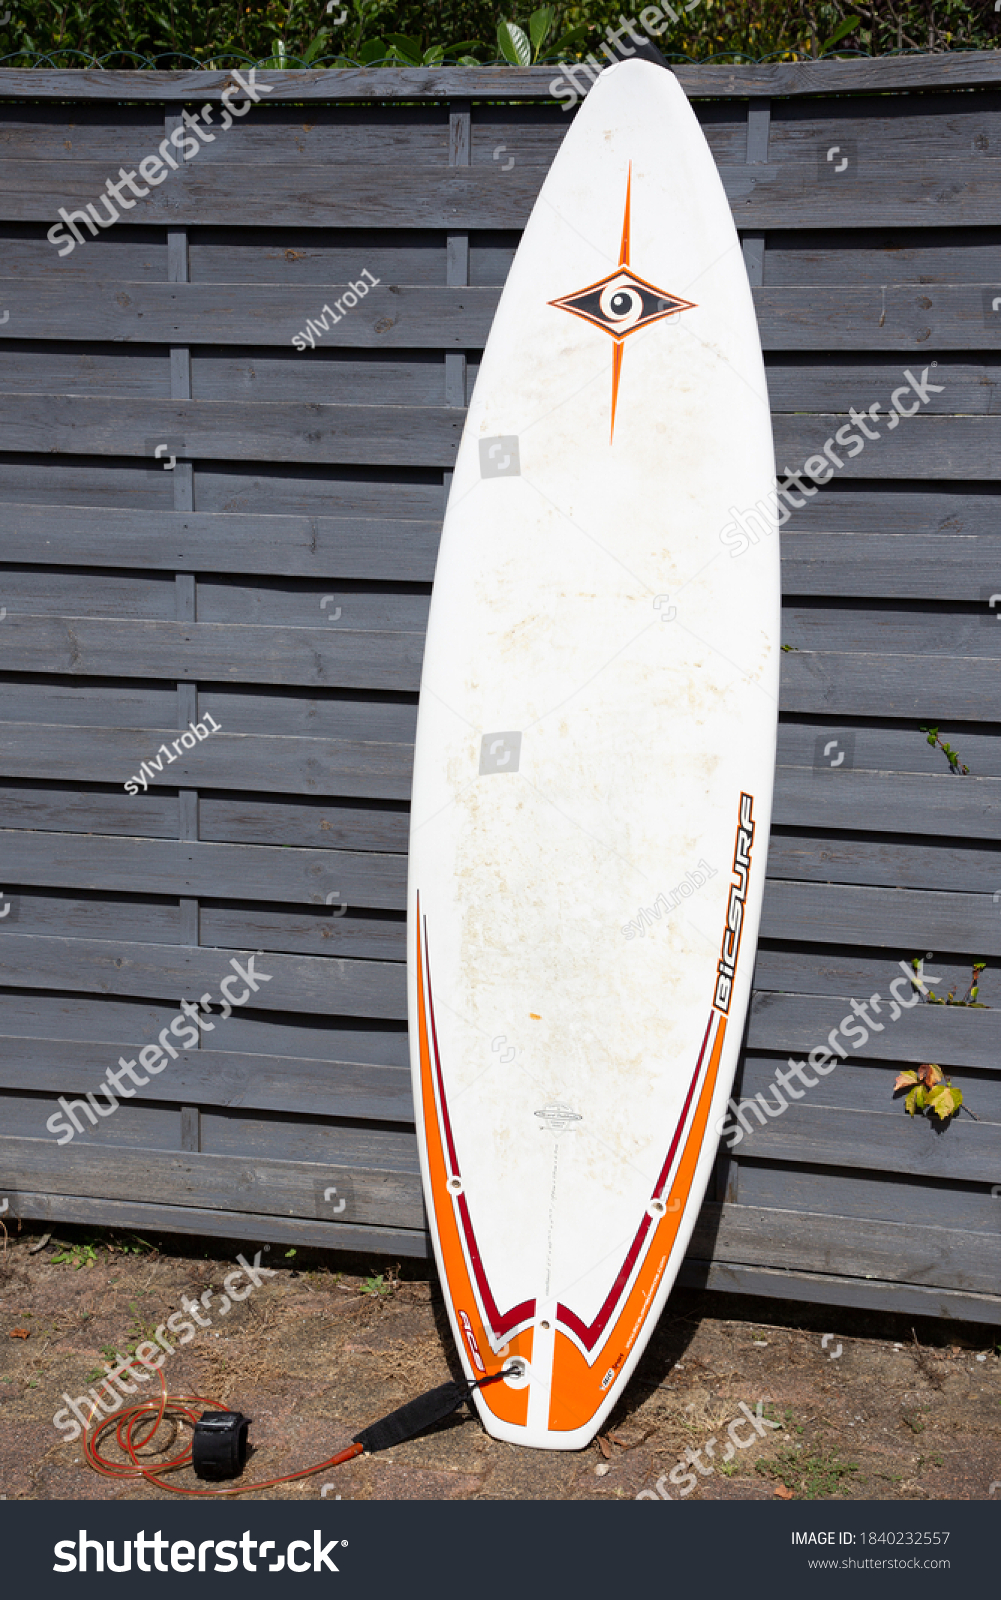 23 Bic surf Images, Stock Photos  Vectors | Shutterstock